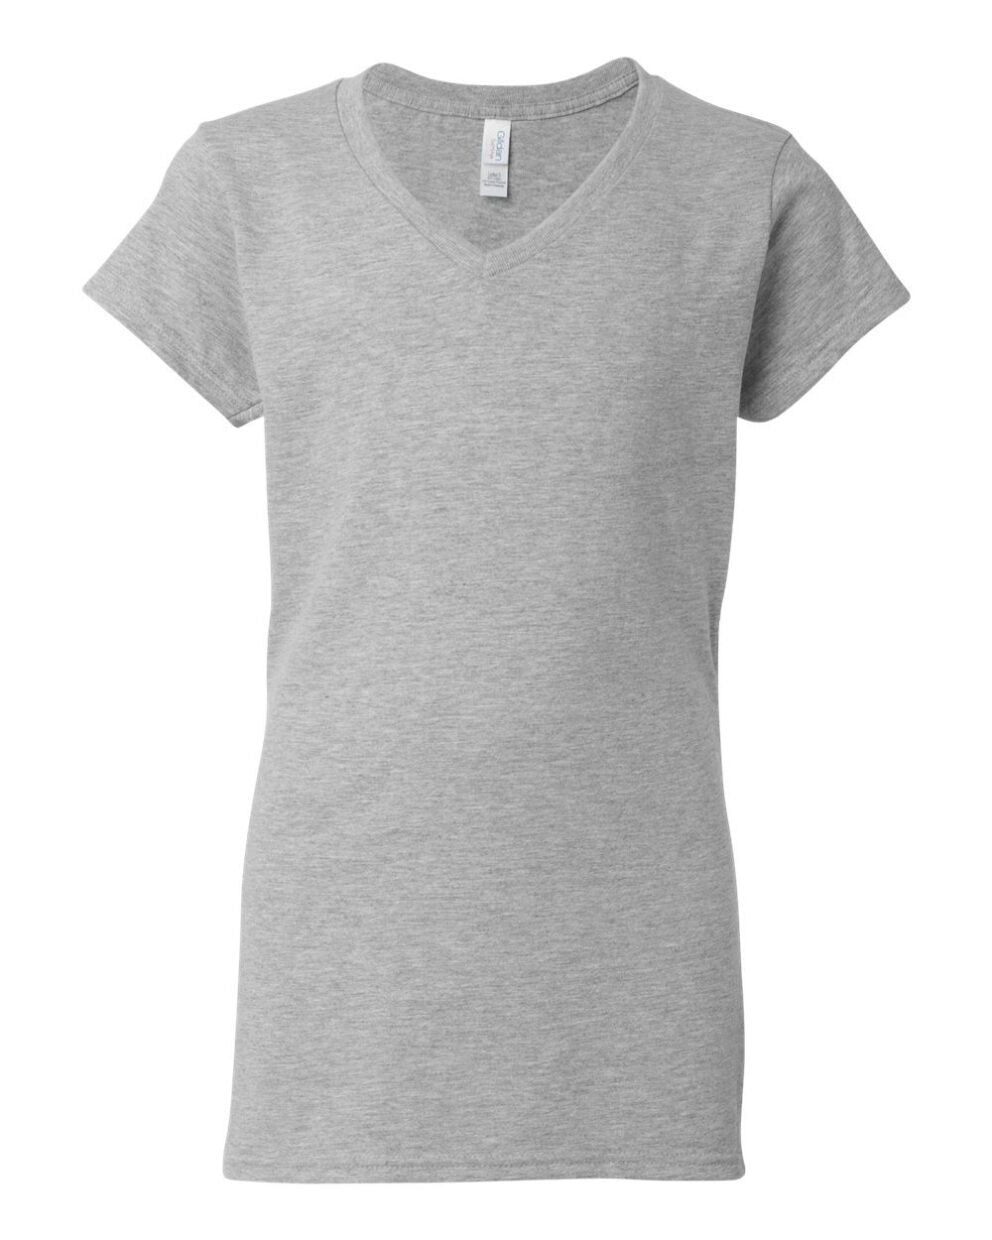 Ladies V-neck Heather Grey Cotton T-shirt